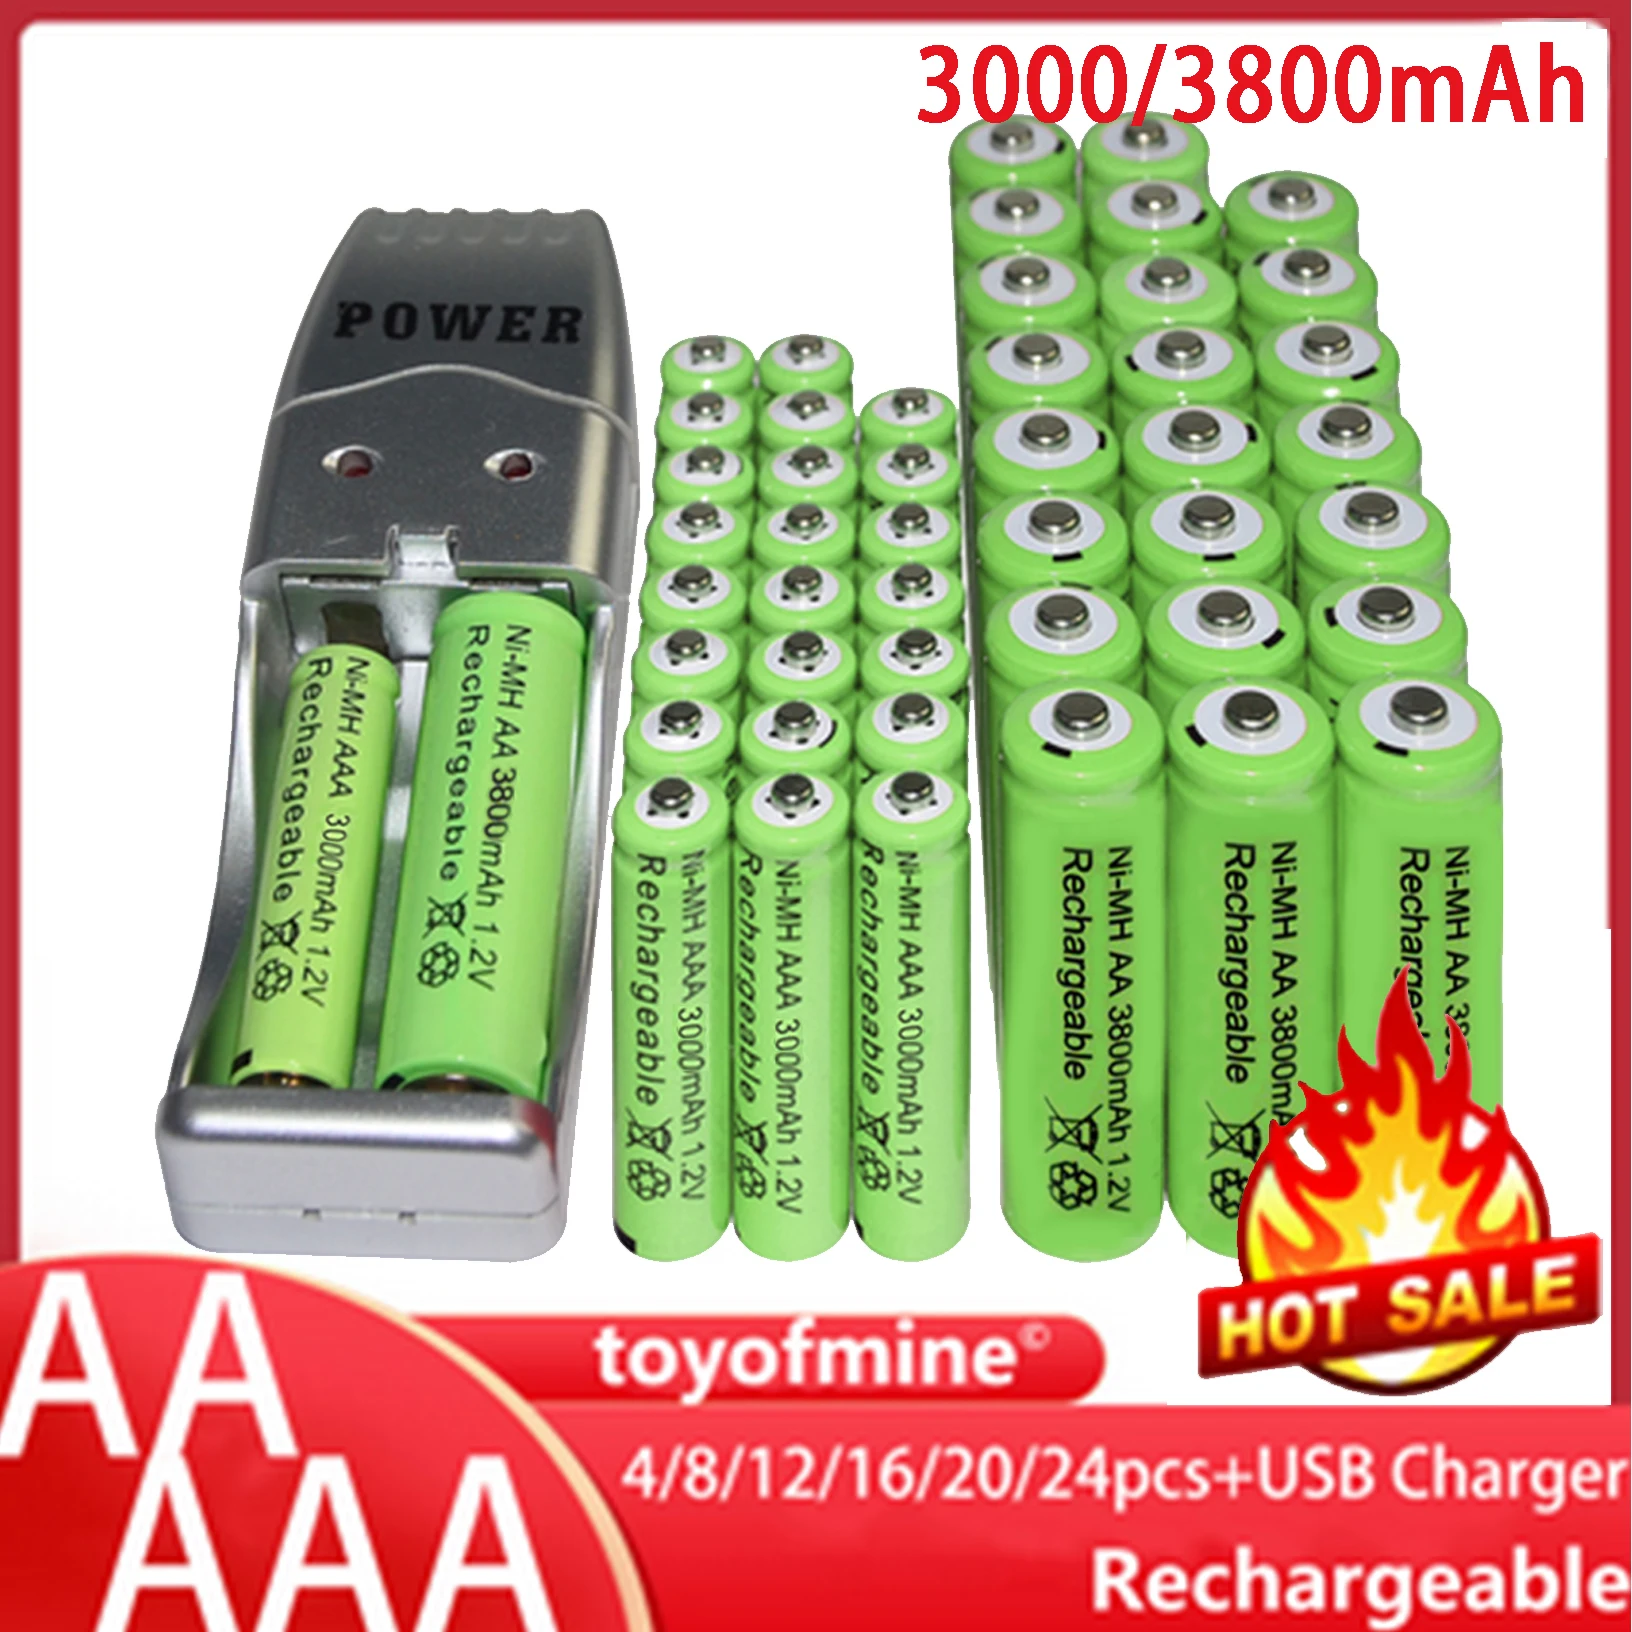 1 2 в AA + AAA NI MH Аккумулятор 3800 мА · ч 3000 перезаряжаемый аккумулятор зеленого цвета